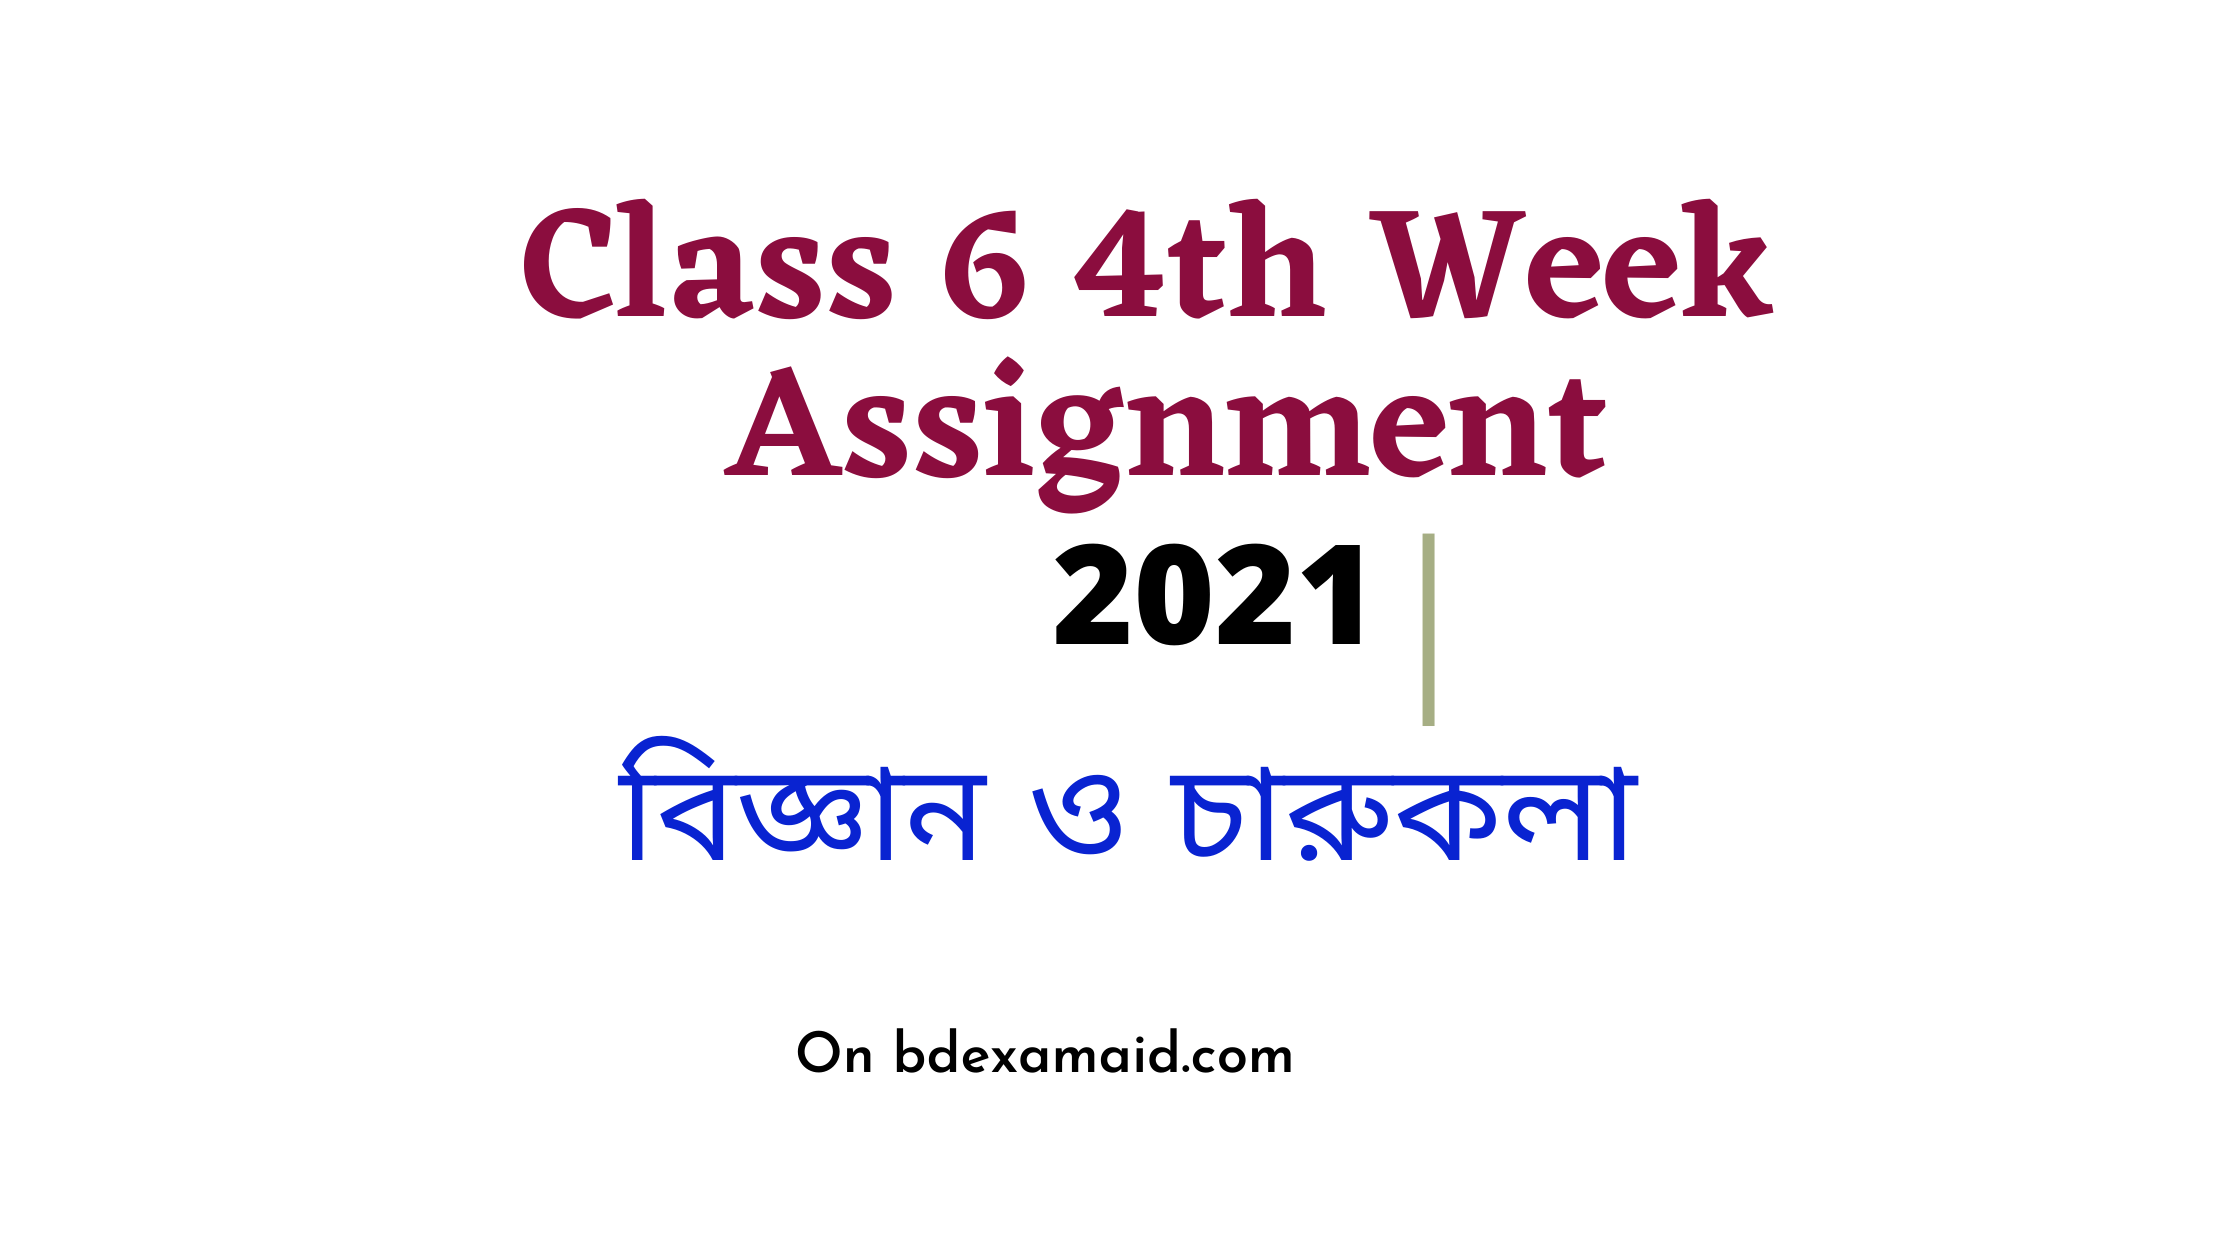 4th assignment class 6 2021